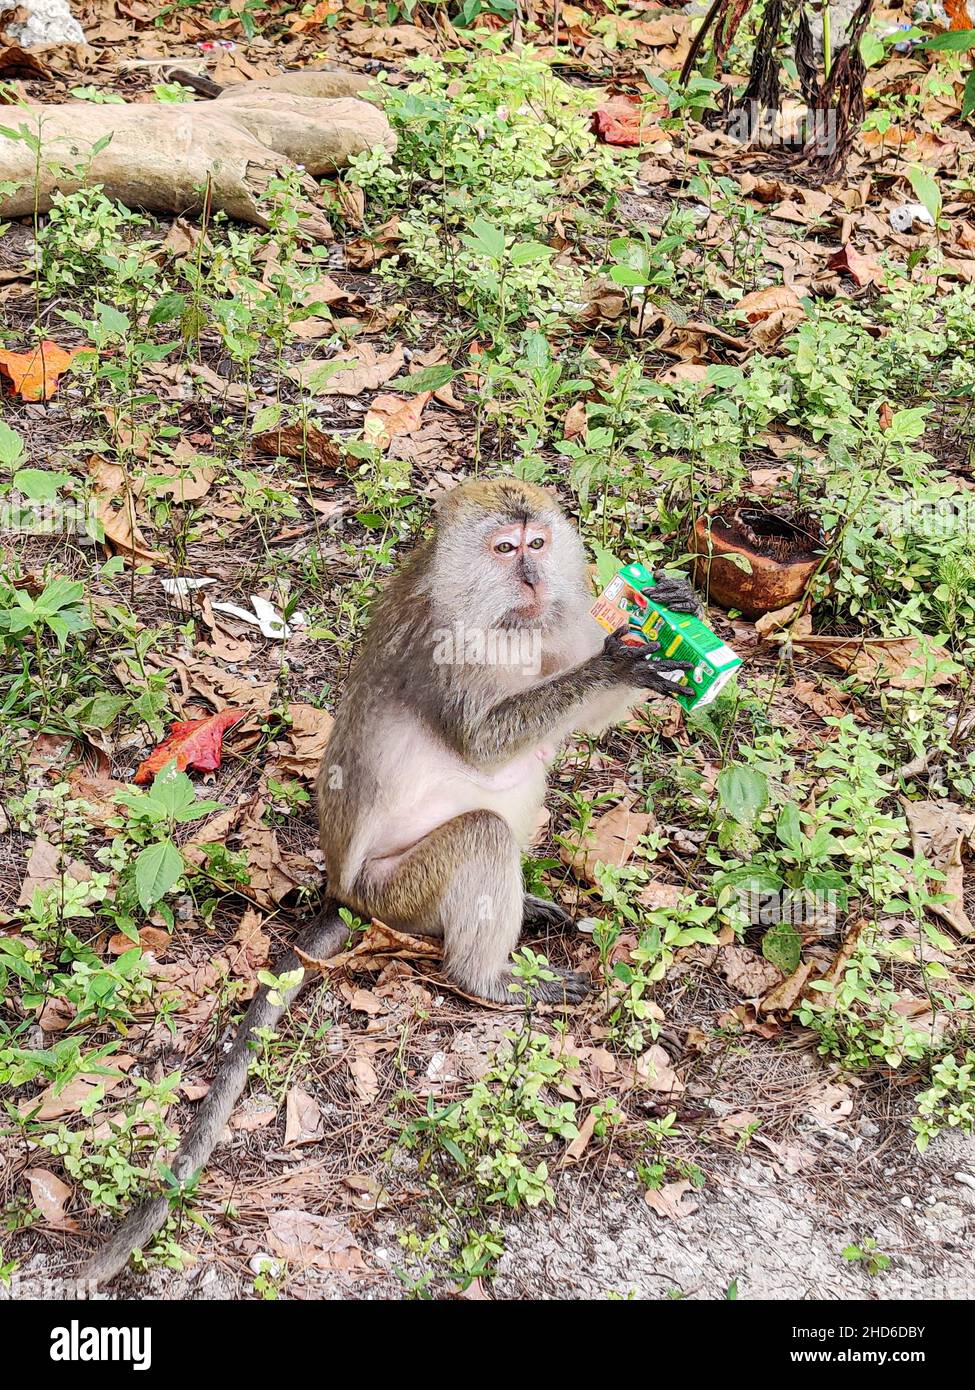 Langkawi Island, Malaysia: 5. Nov 2021 - Ein Affe trinkt aus einer Saftbox. Selektive Fokuspunkte Stockfoto